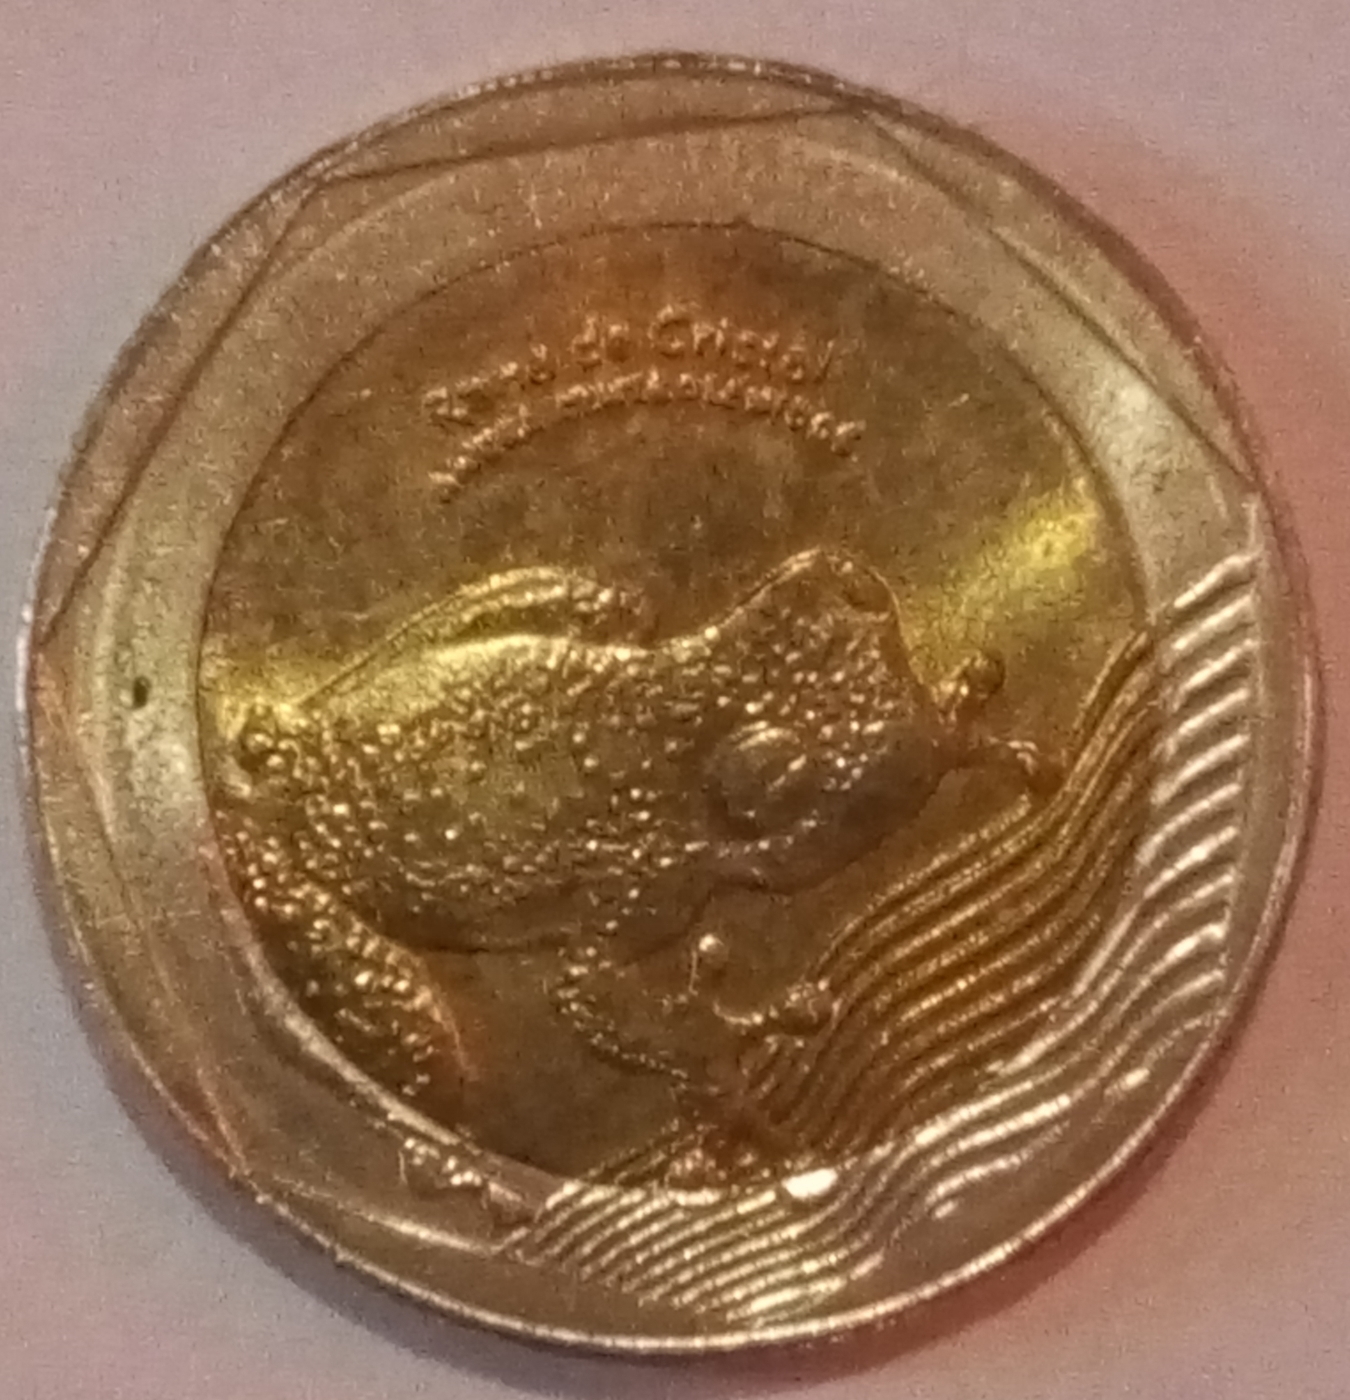 500 Pesos 2017, Republic (2011-2020) - Colombia - Coin - 42734